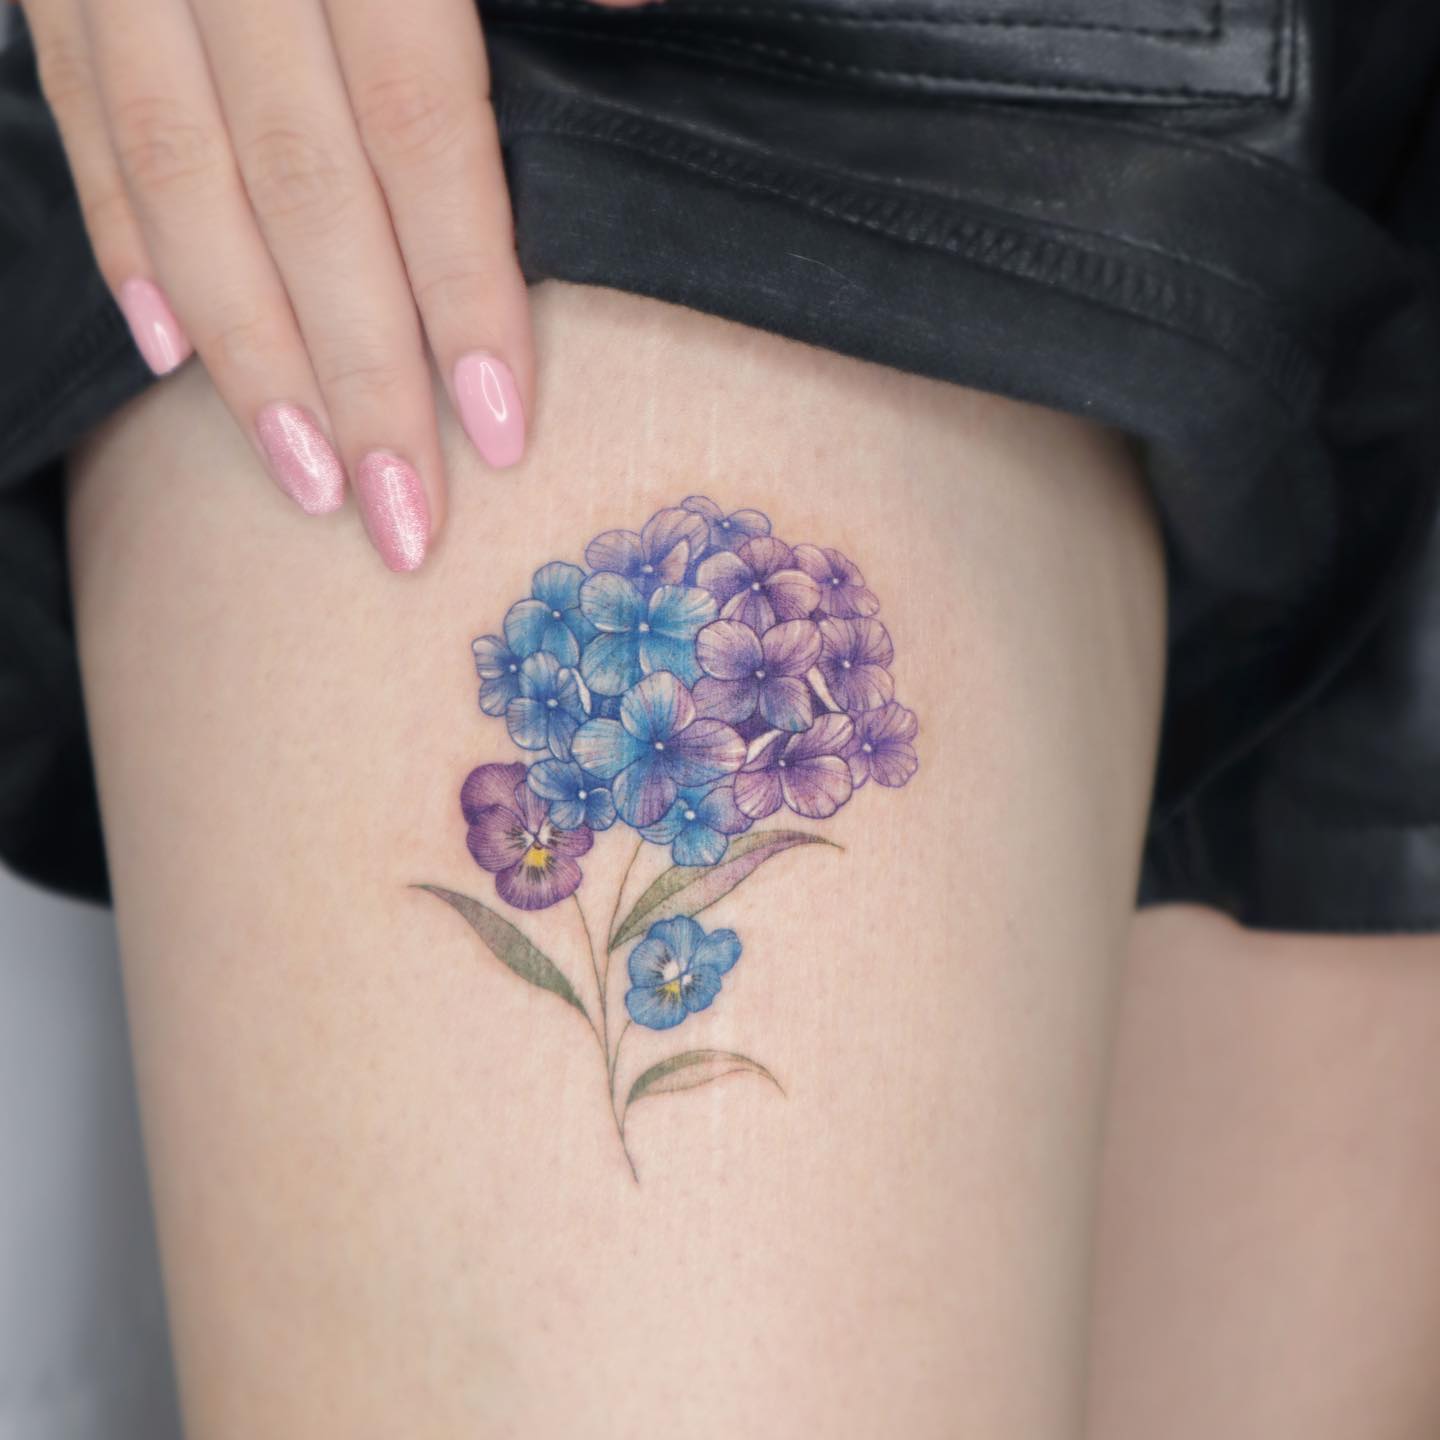 Tatuaje de hortensia azul y morada.